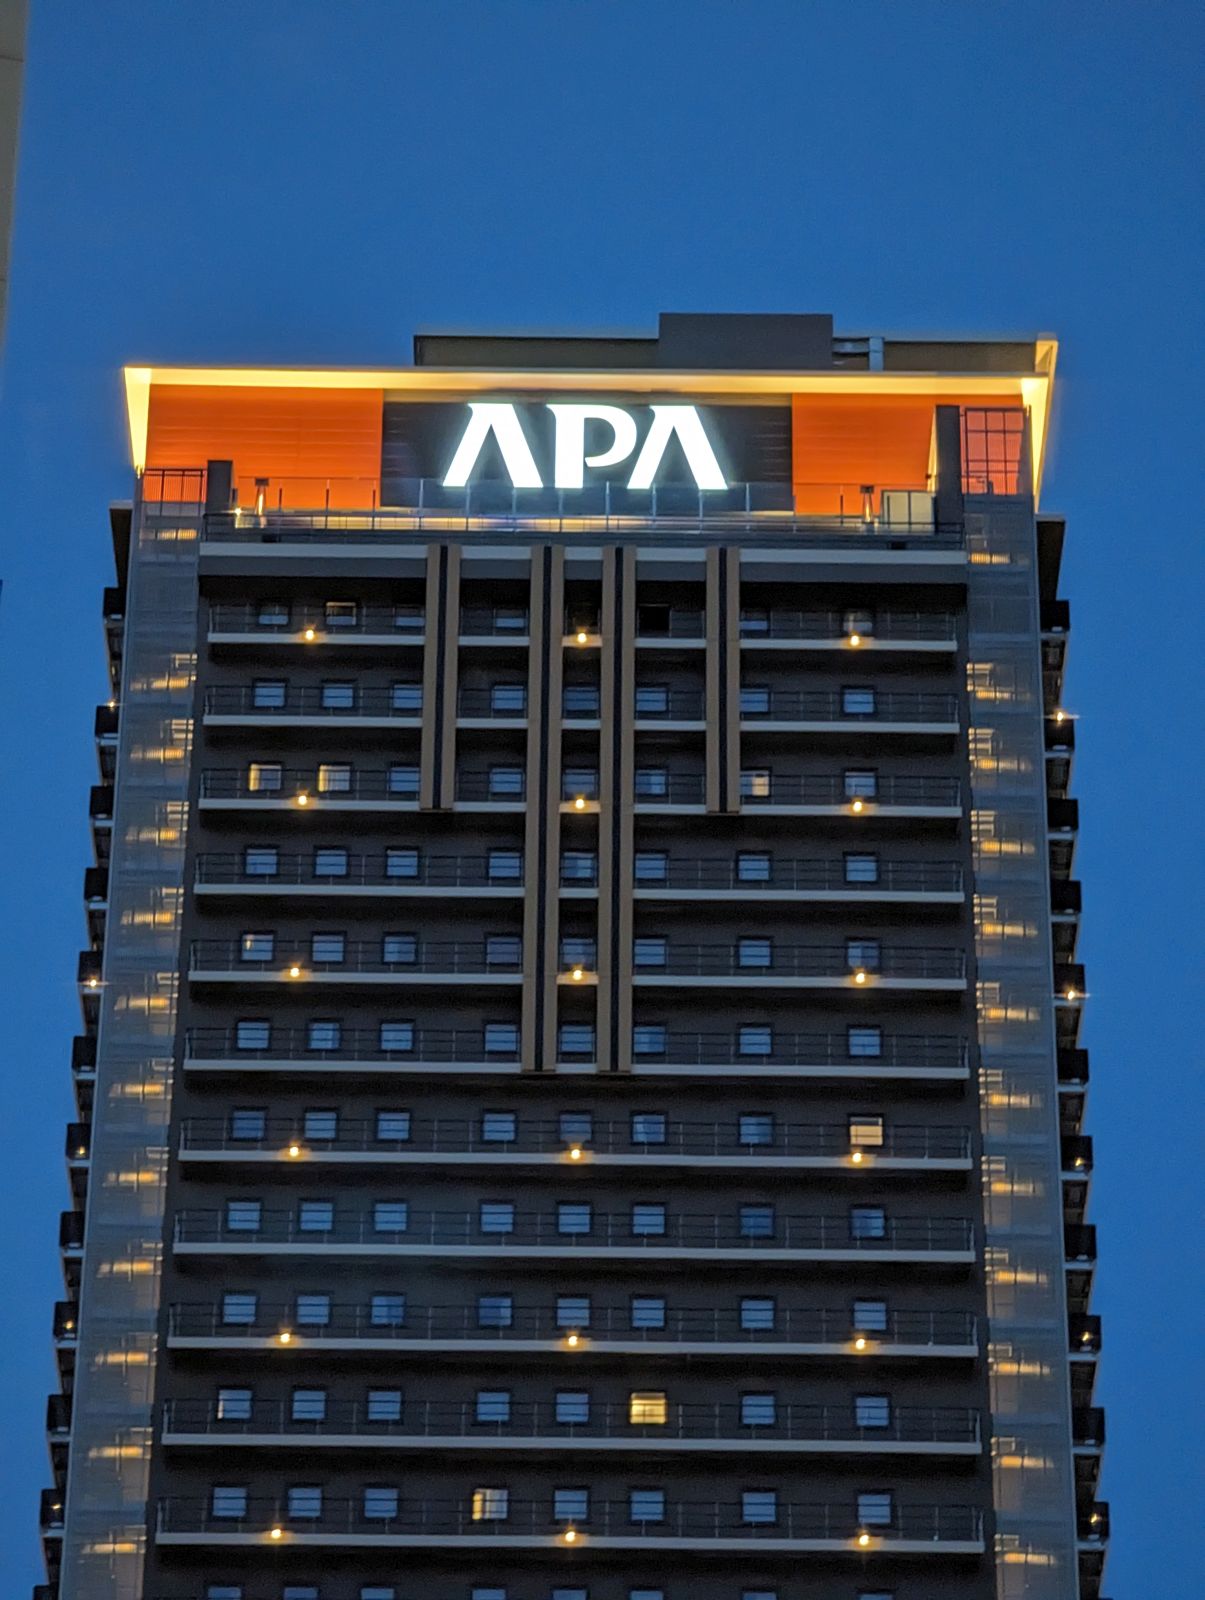 APAホテル